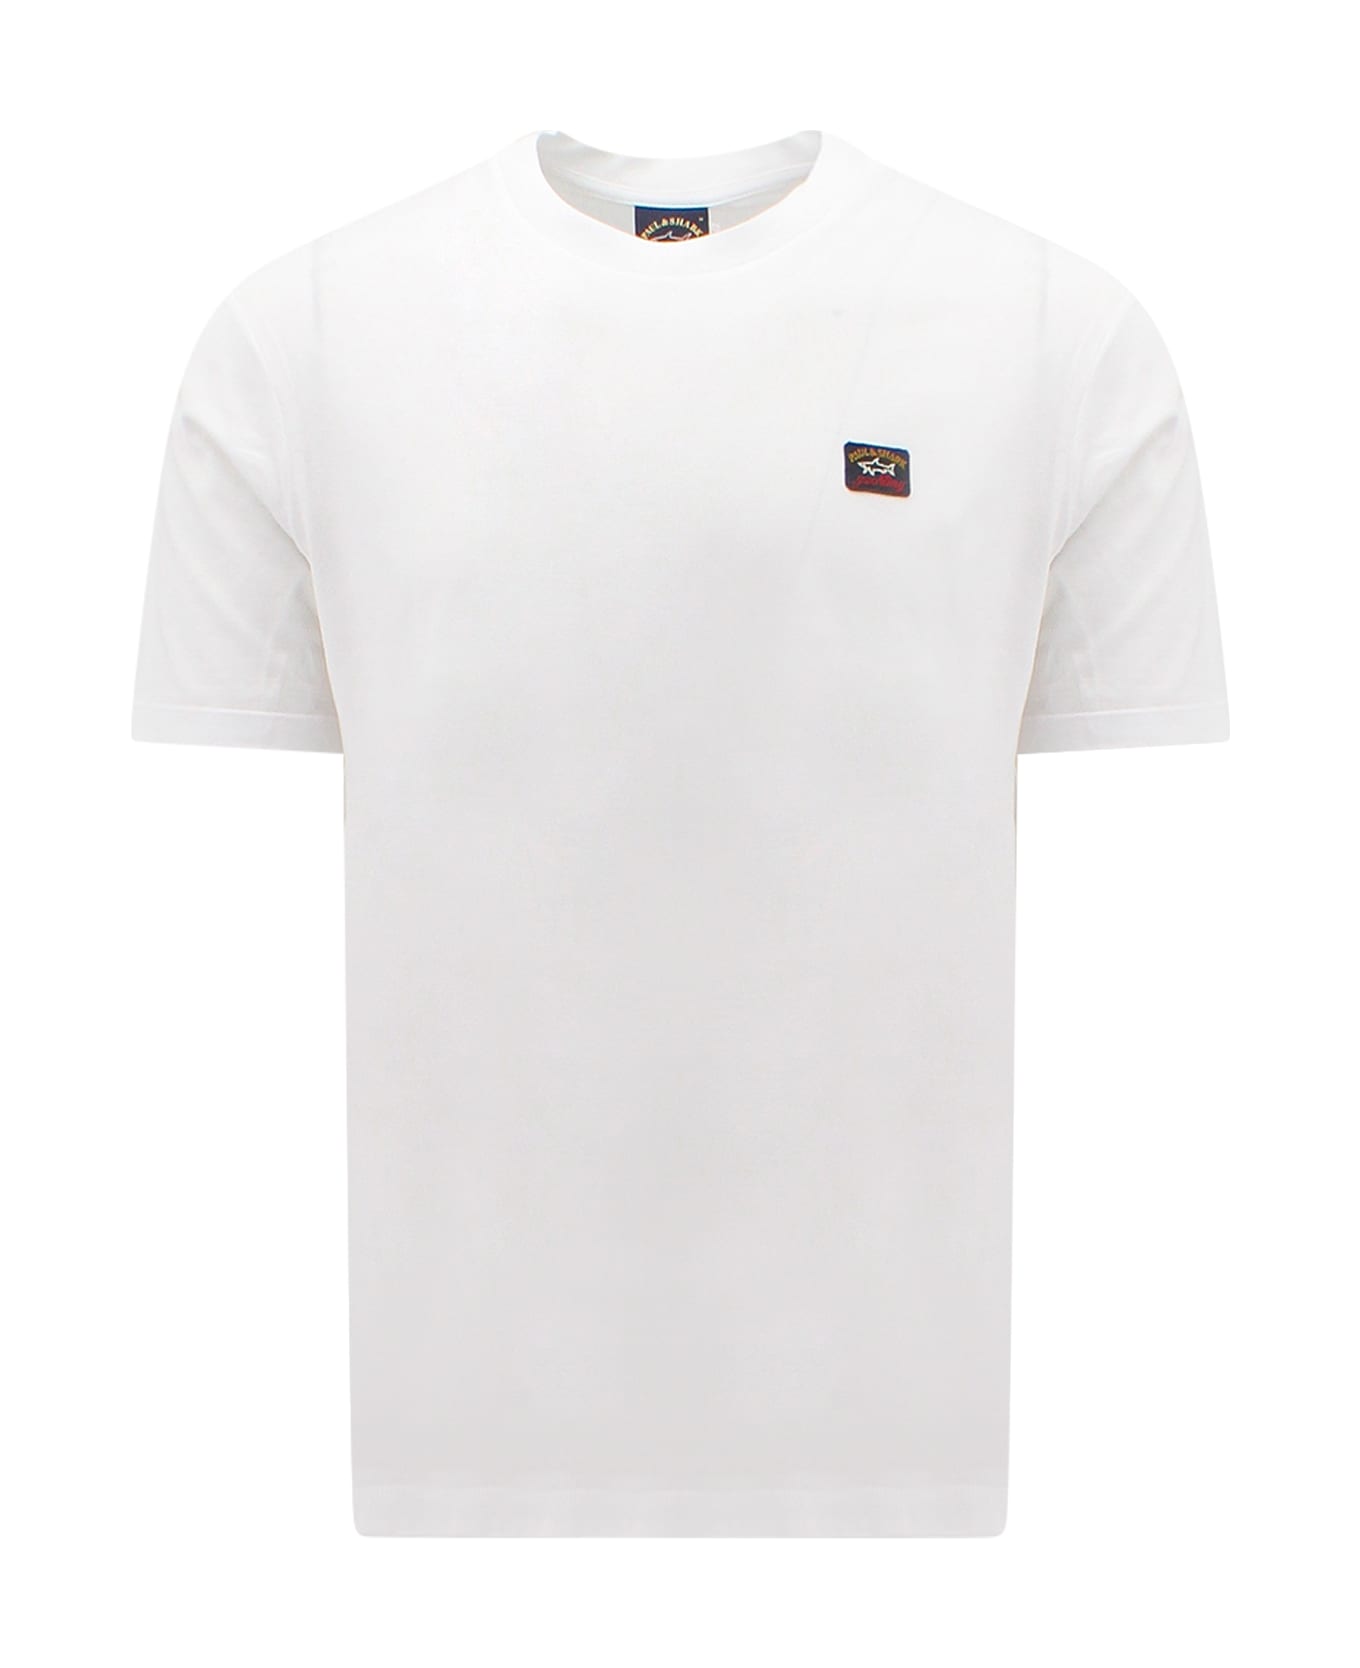 Paul&Shark T-shirt - White